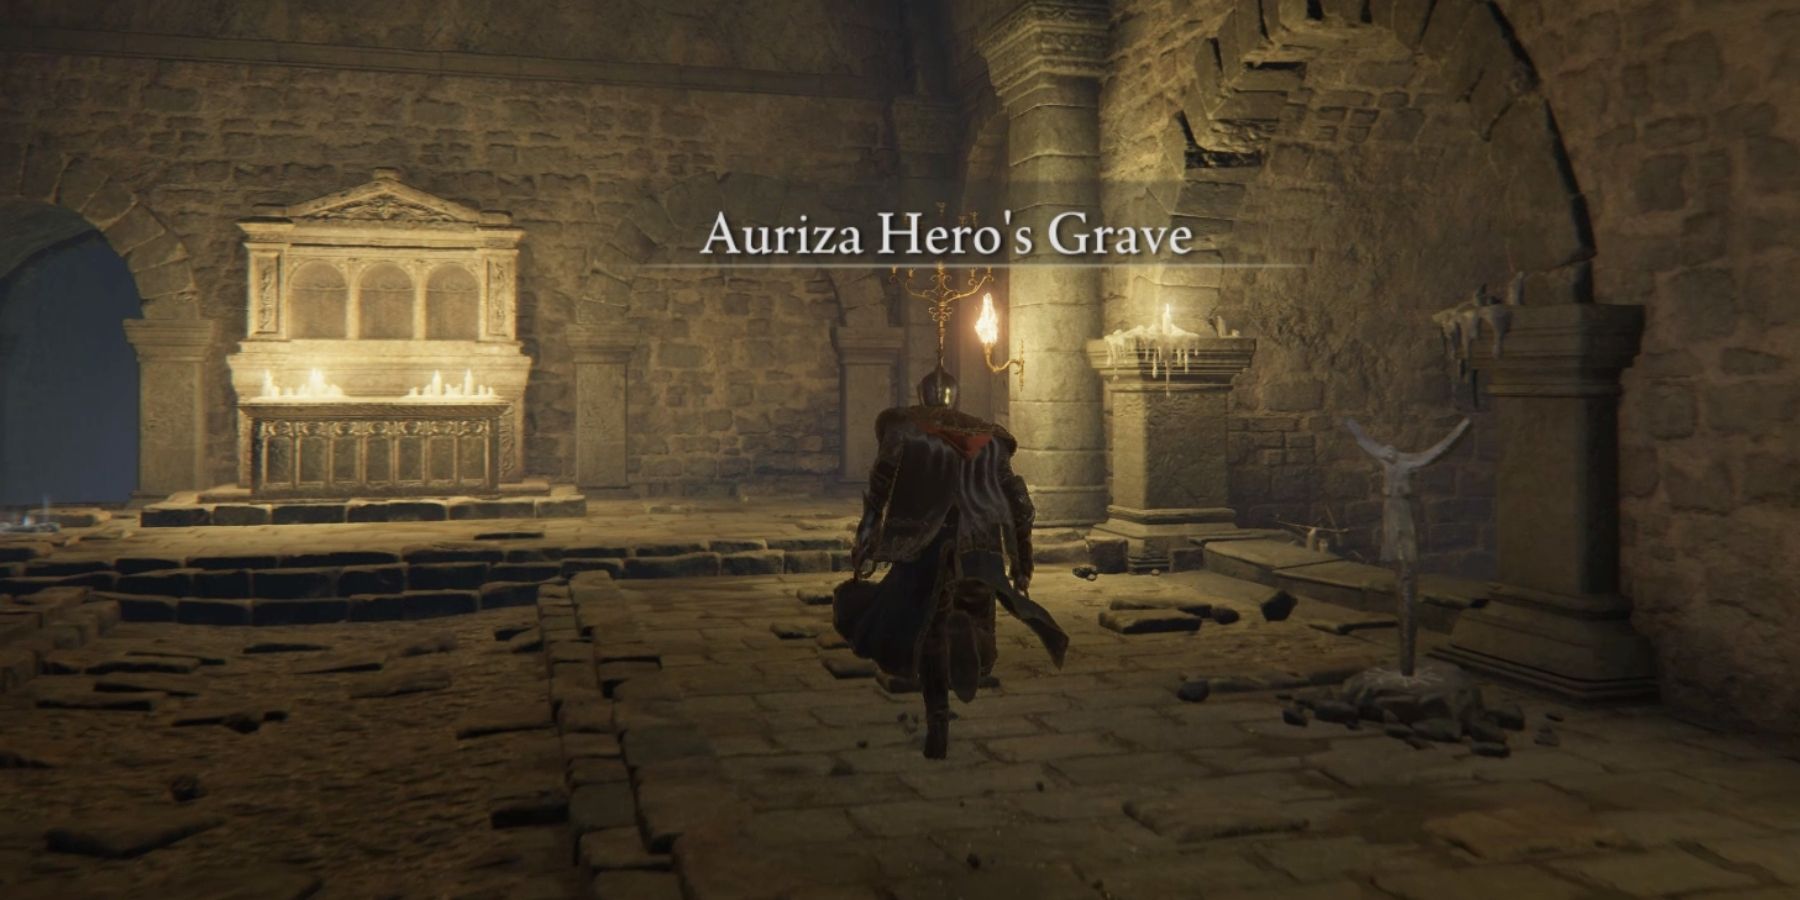 auriza hero's grave in elden ring